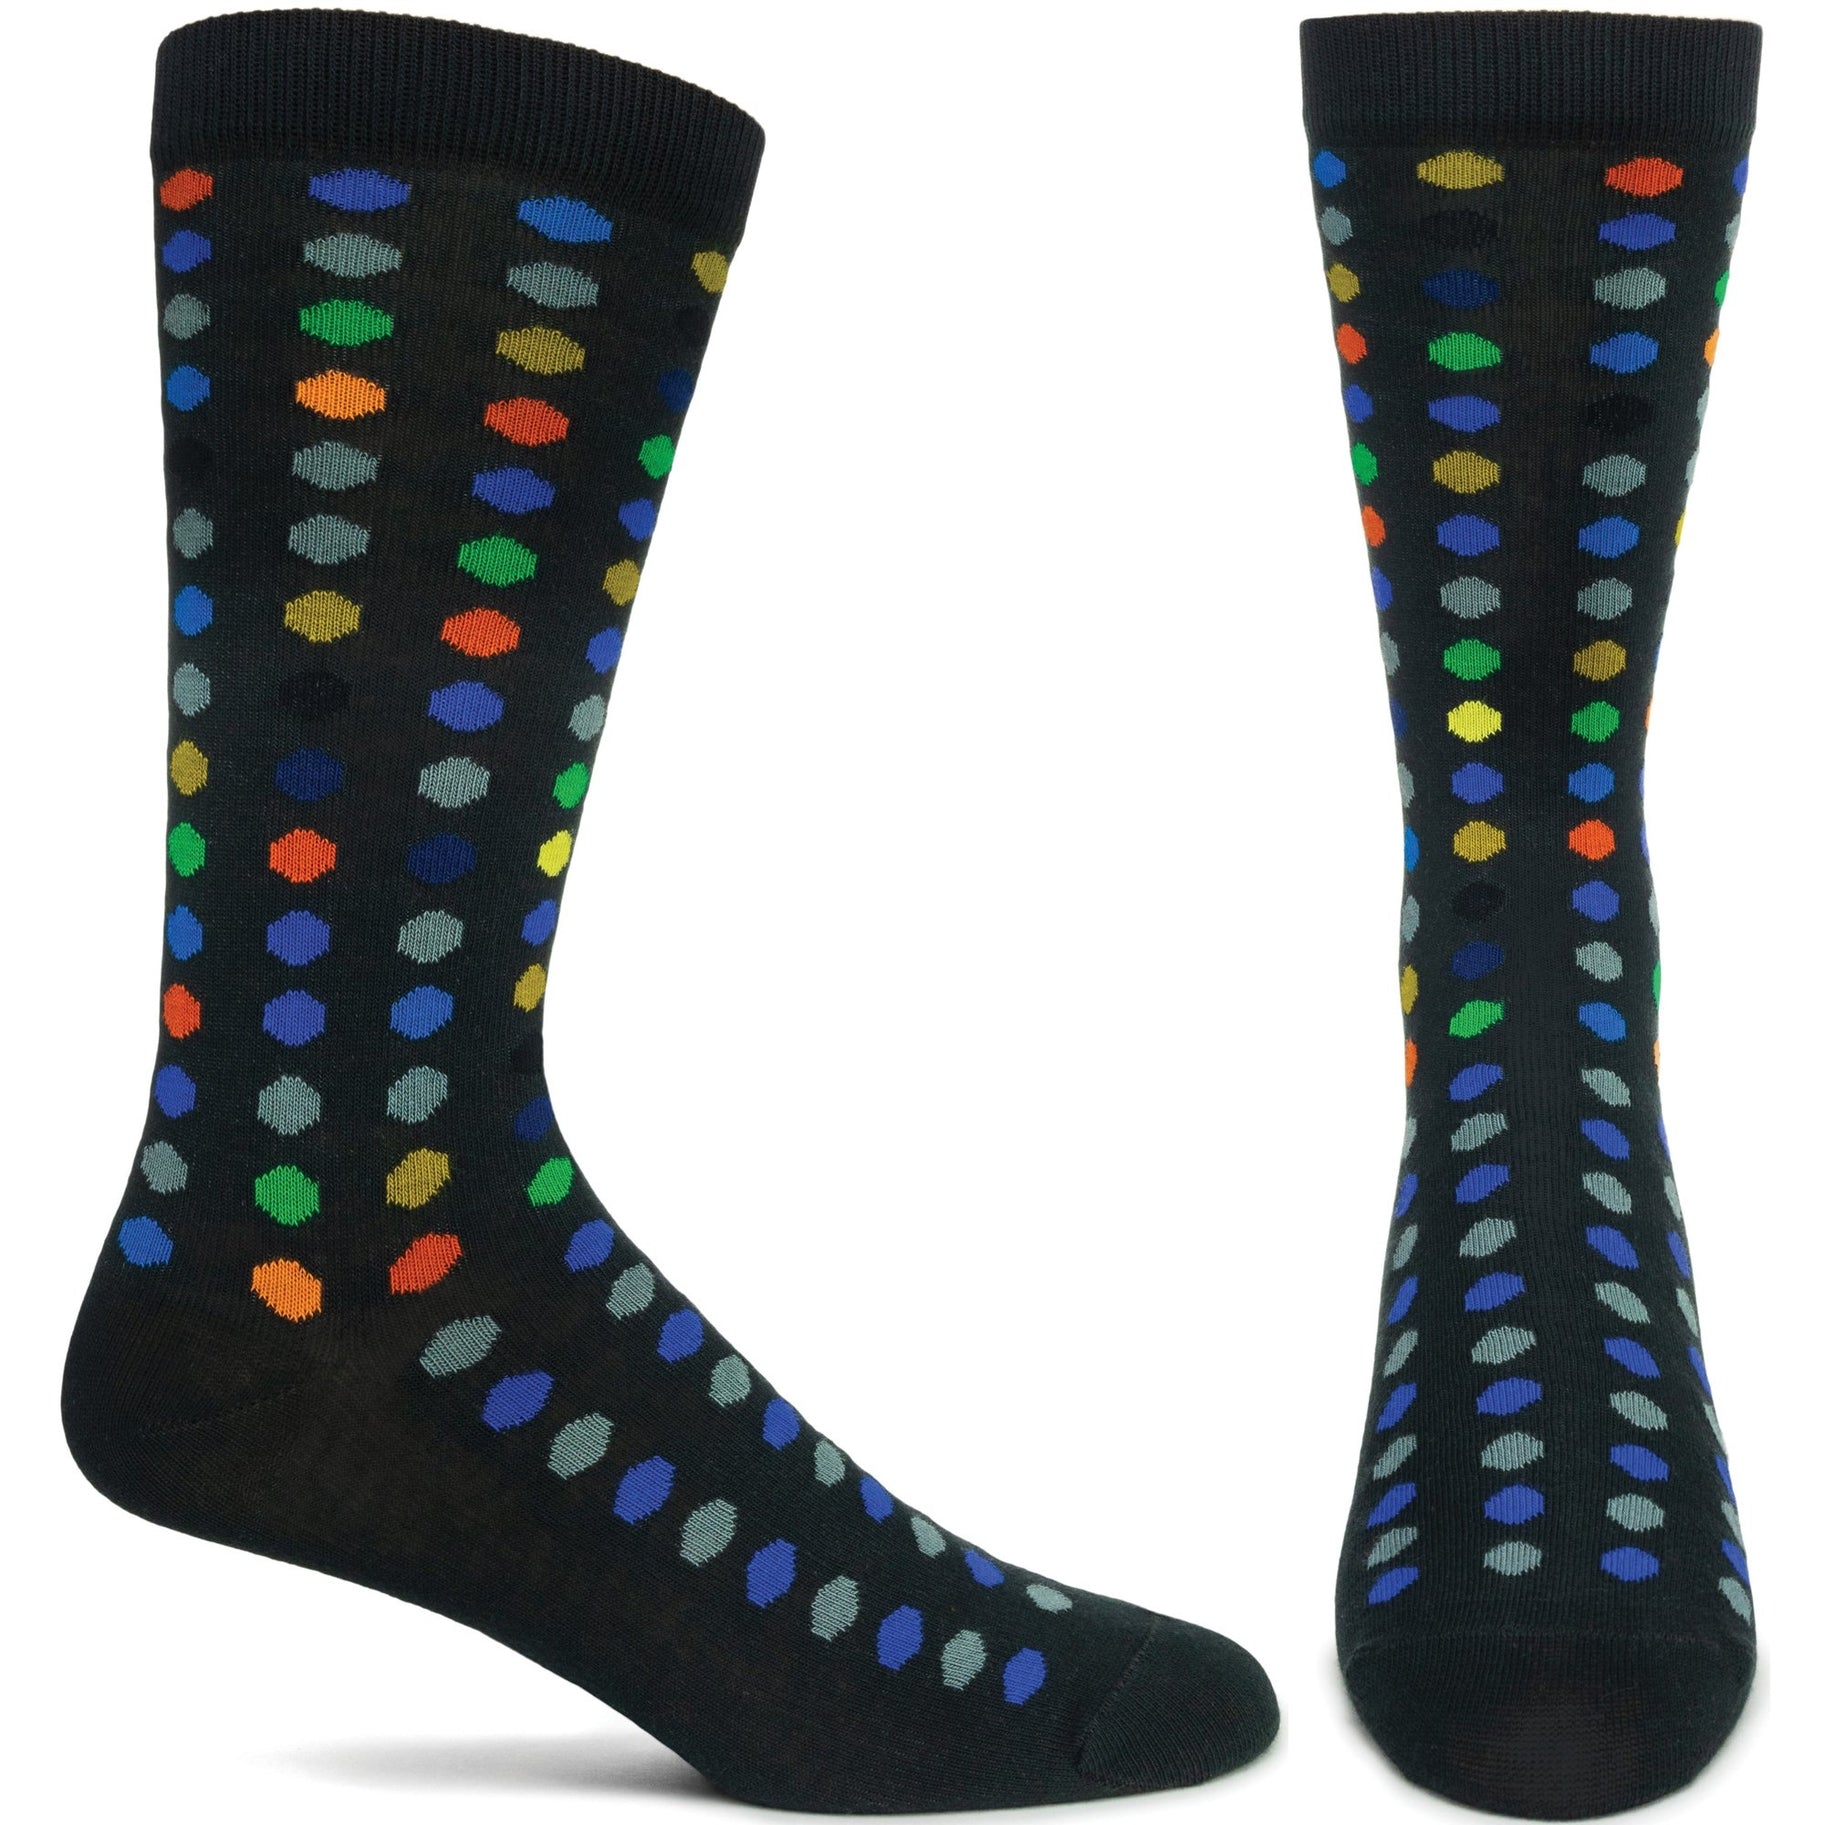 Dots to Dots Men's Sock